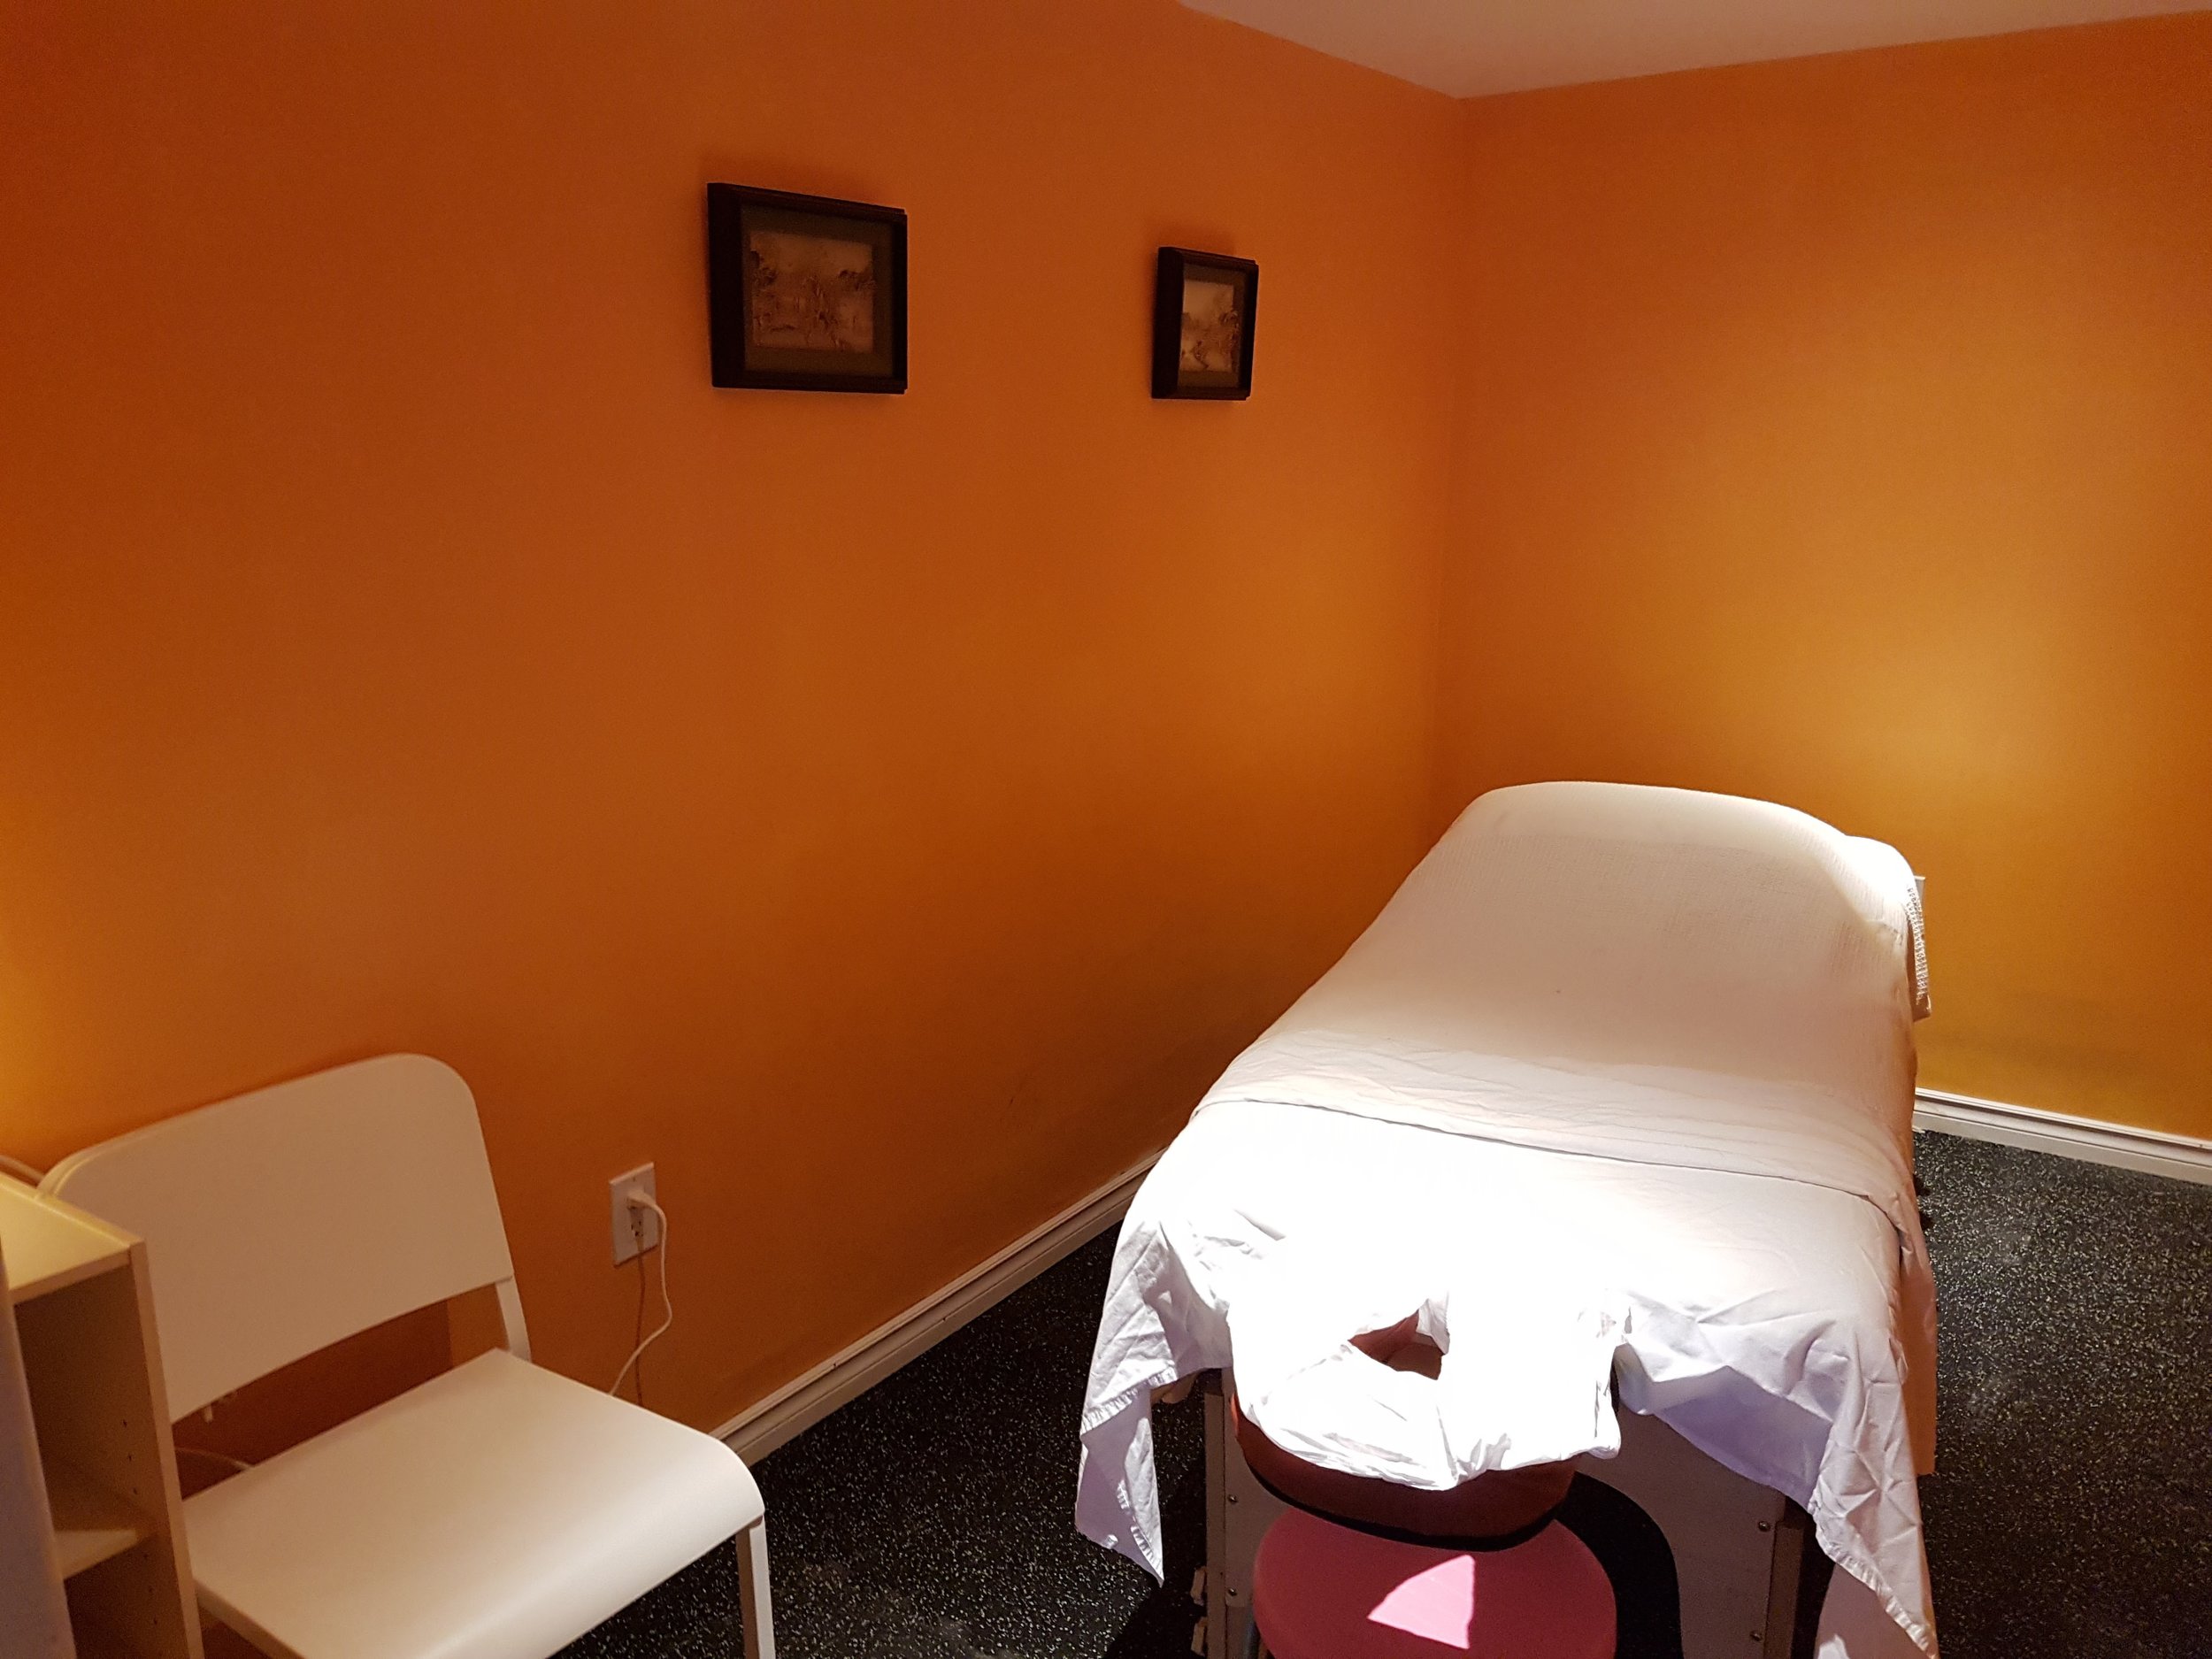 Treatment Room #2